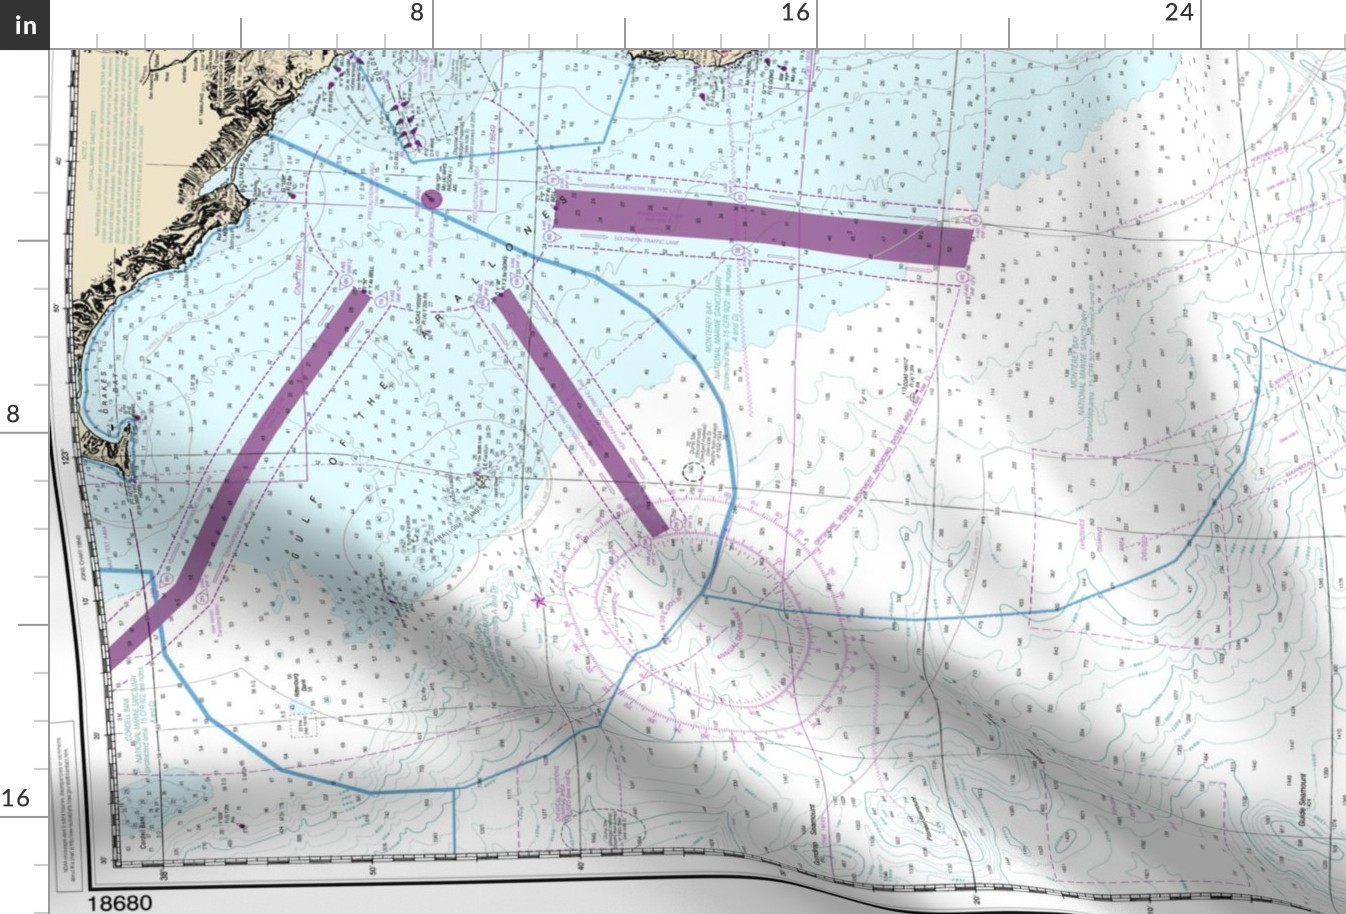 NOAA California Coast #18680 nautical chart, Point Sur to San Francisco  (46.5"x36", fits one yard of wide fabrics )